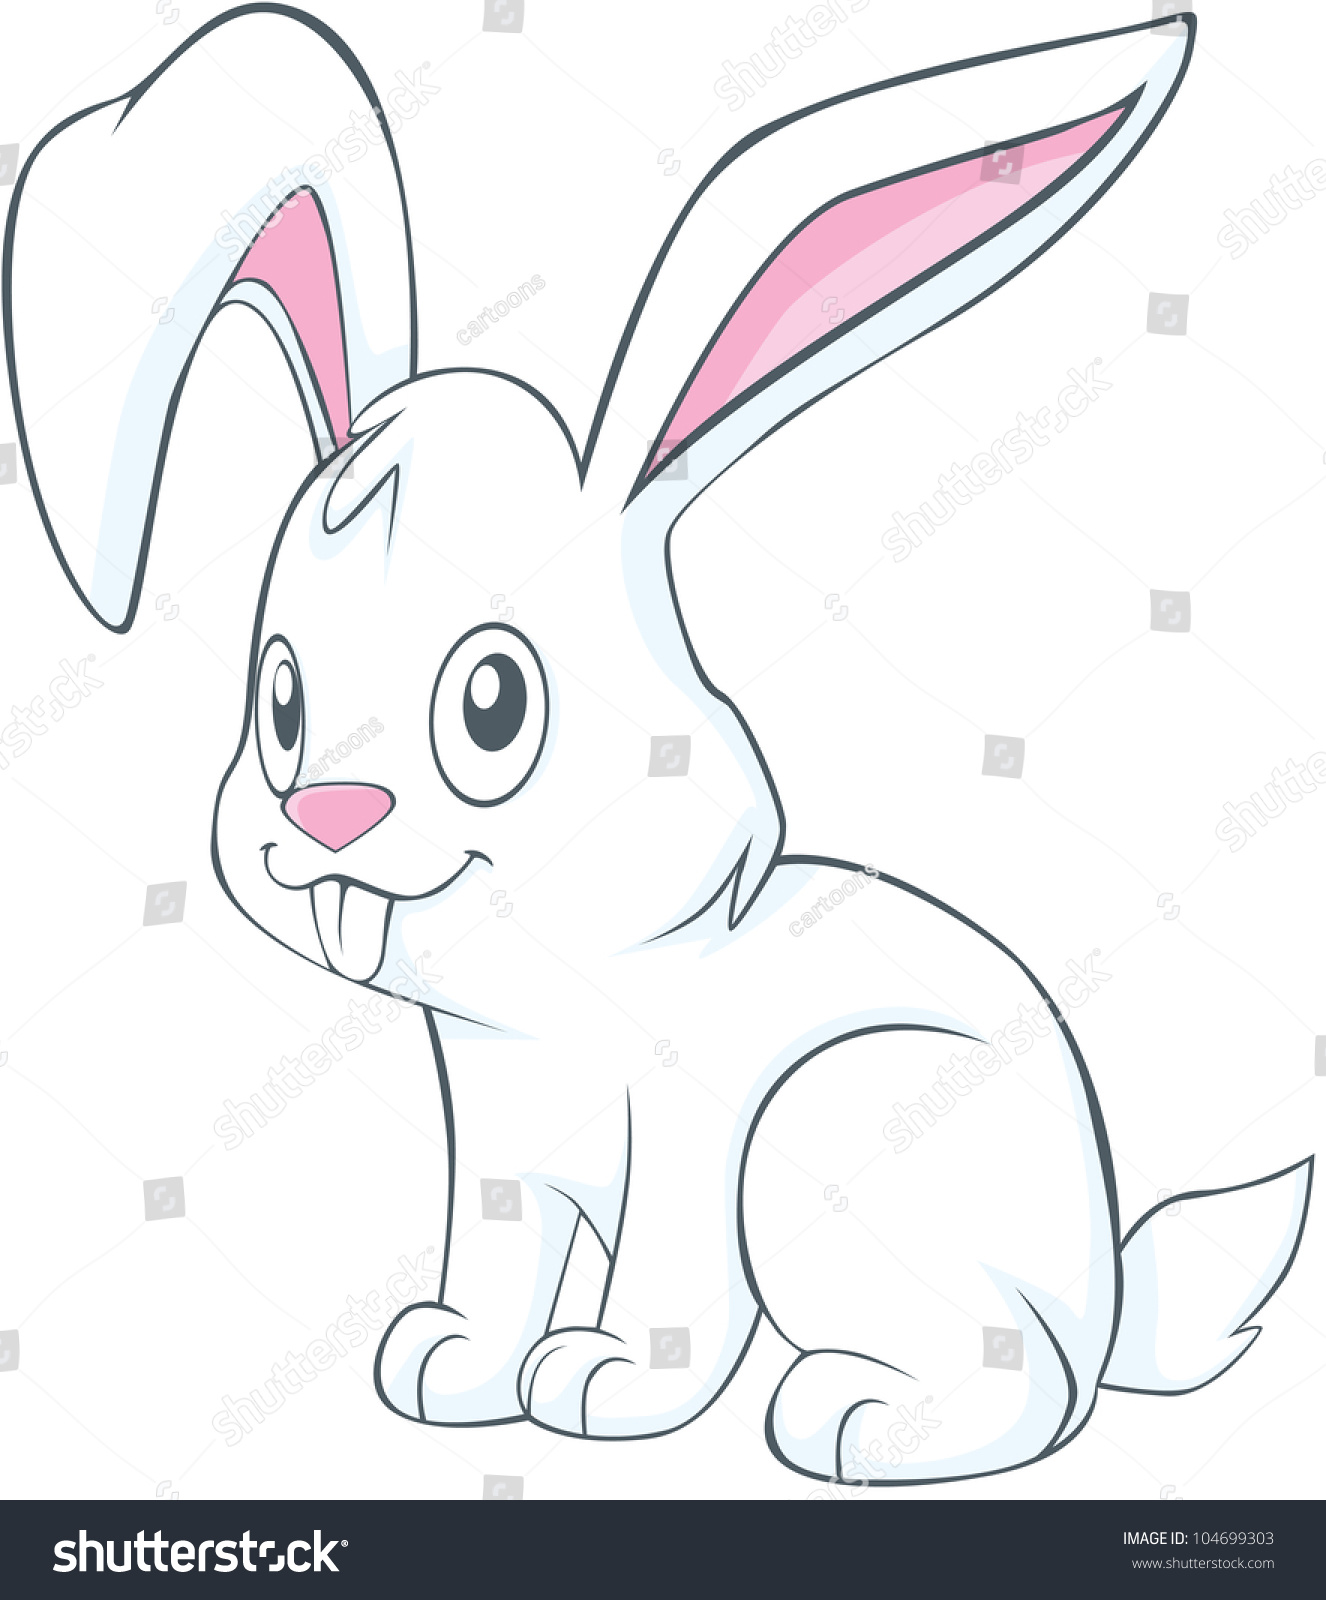 Cute Rabbit Illustration - 104699303 : Shutterstock